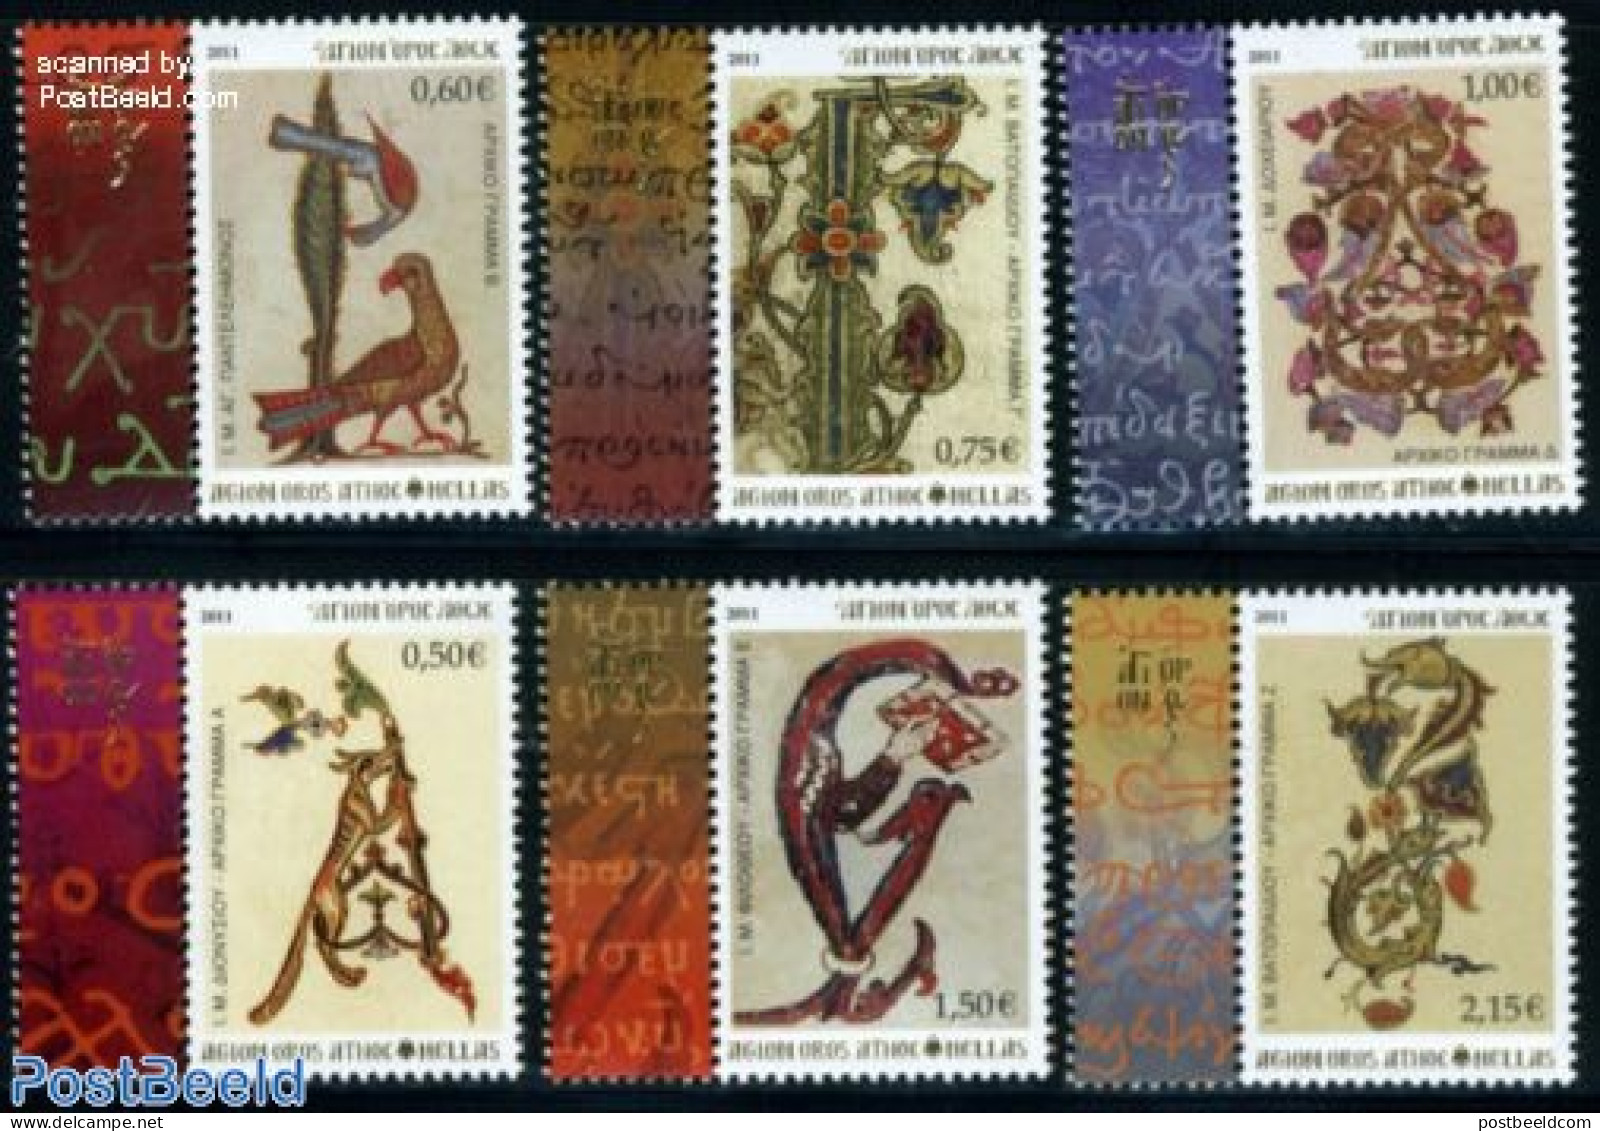 Greece 2011 Mount Athos 6v+tabs, Mint NH - Unused Stamps